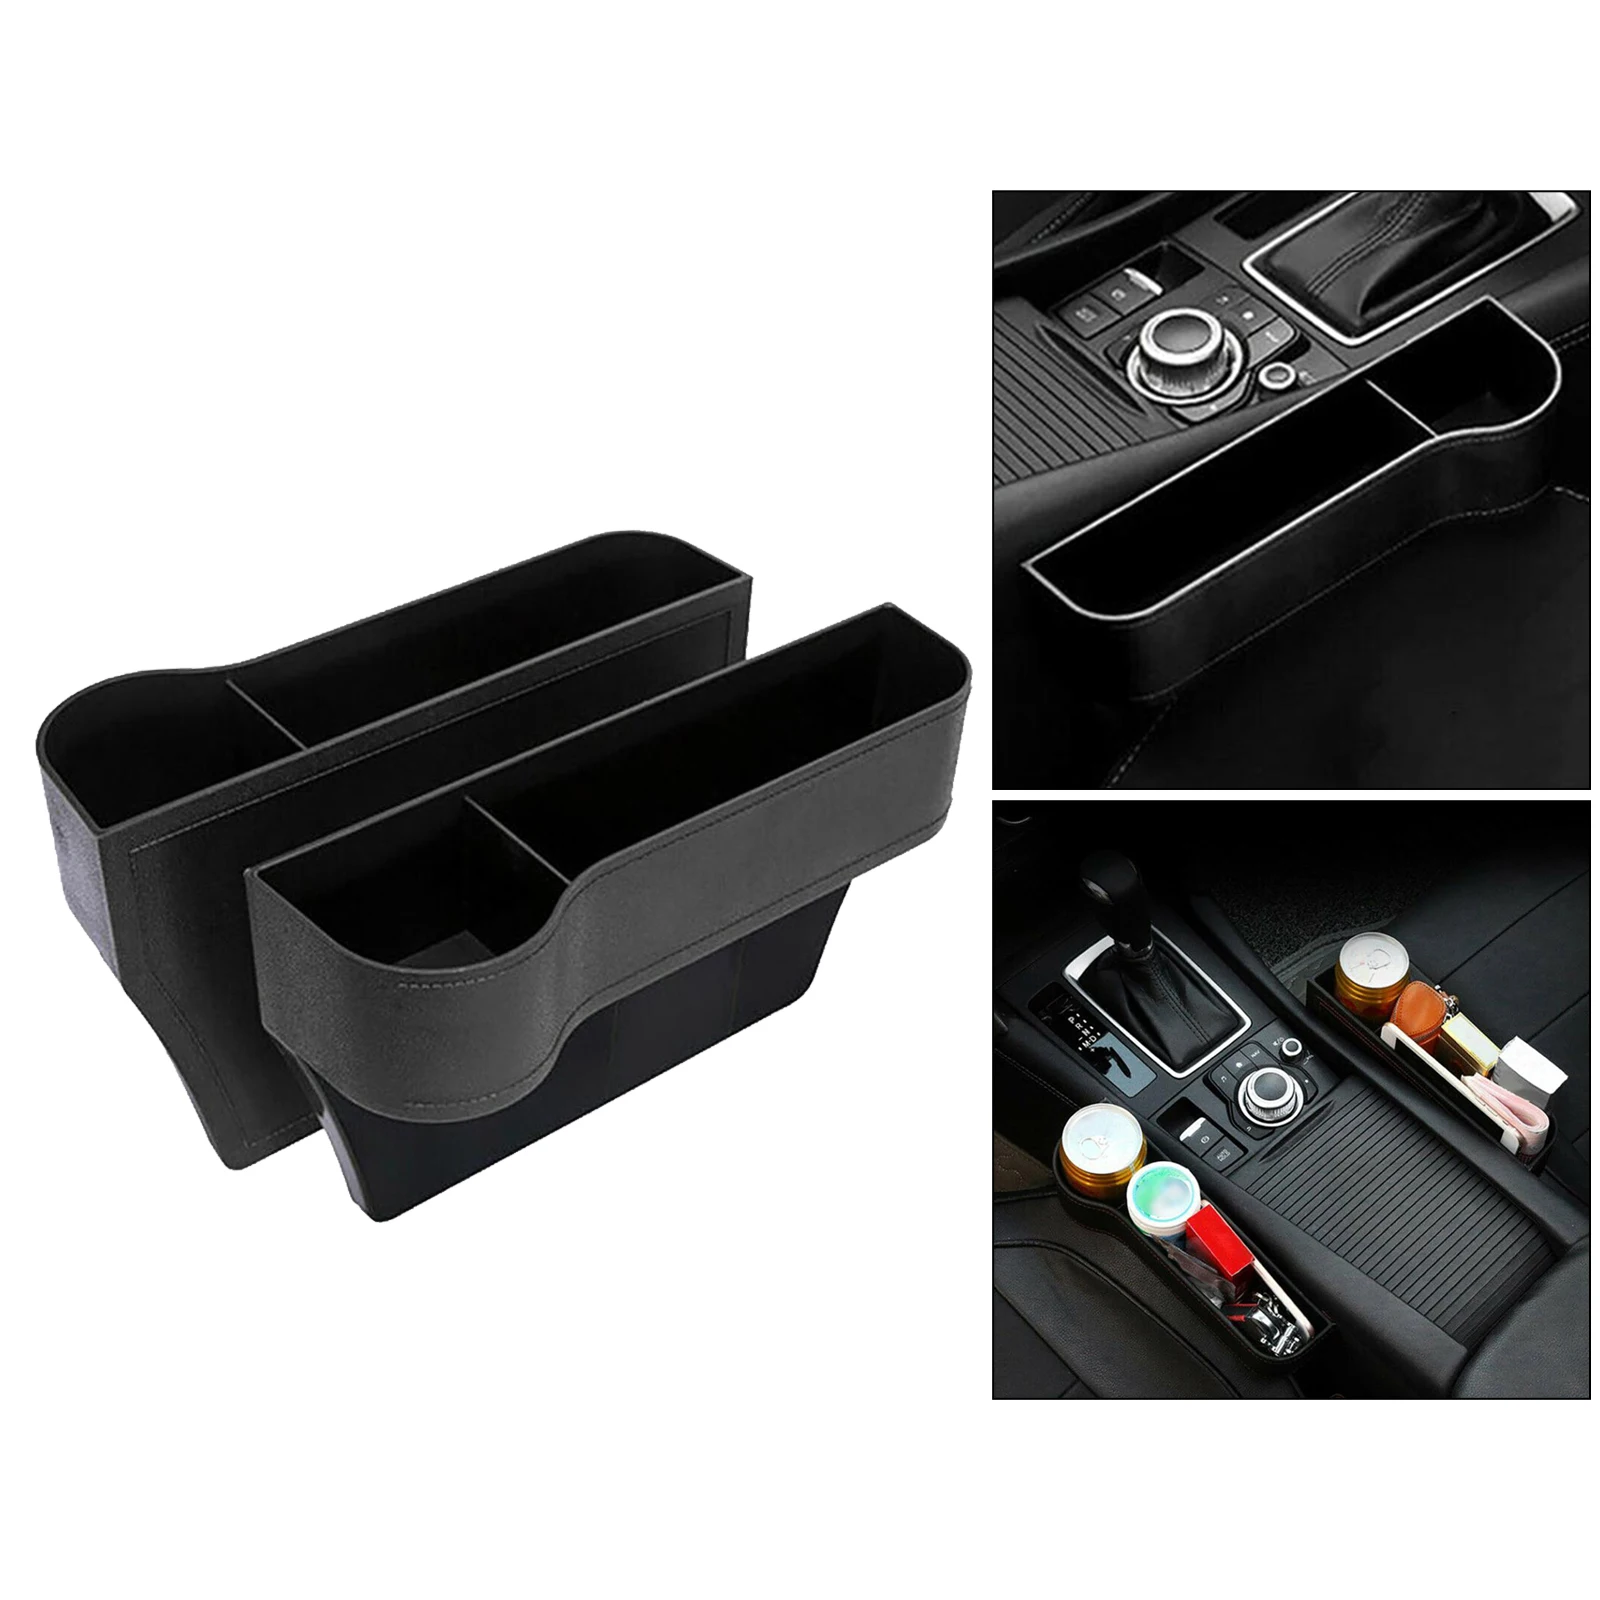 2x Car Seat Gap Catcher Filler Between Seats Organizer Storage Box Pocket for Cellphone Wallet Keys Cellphones Keys Cards Black